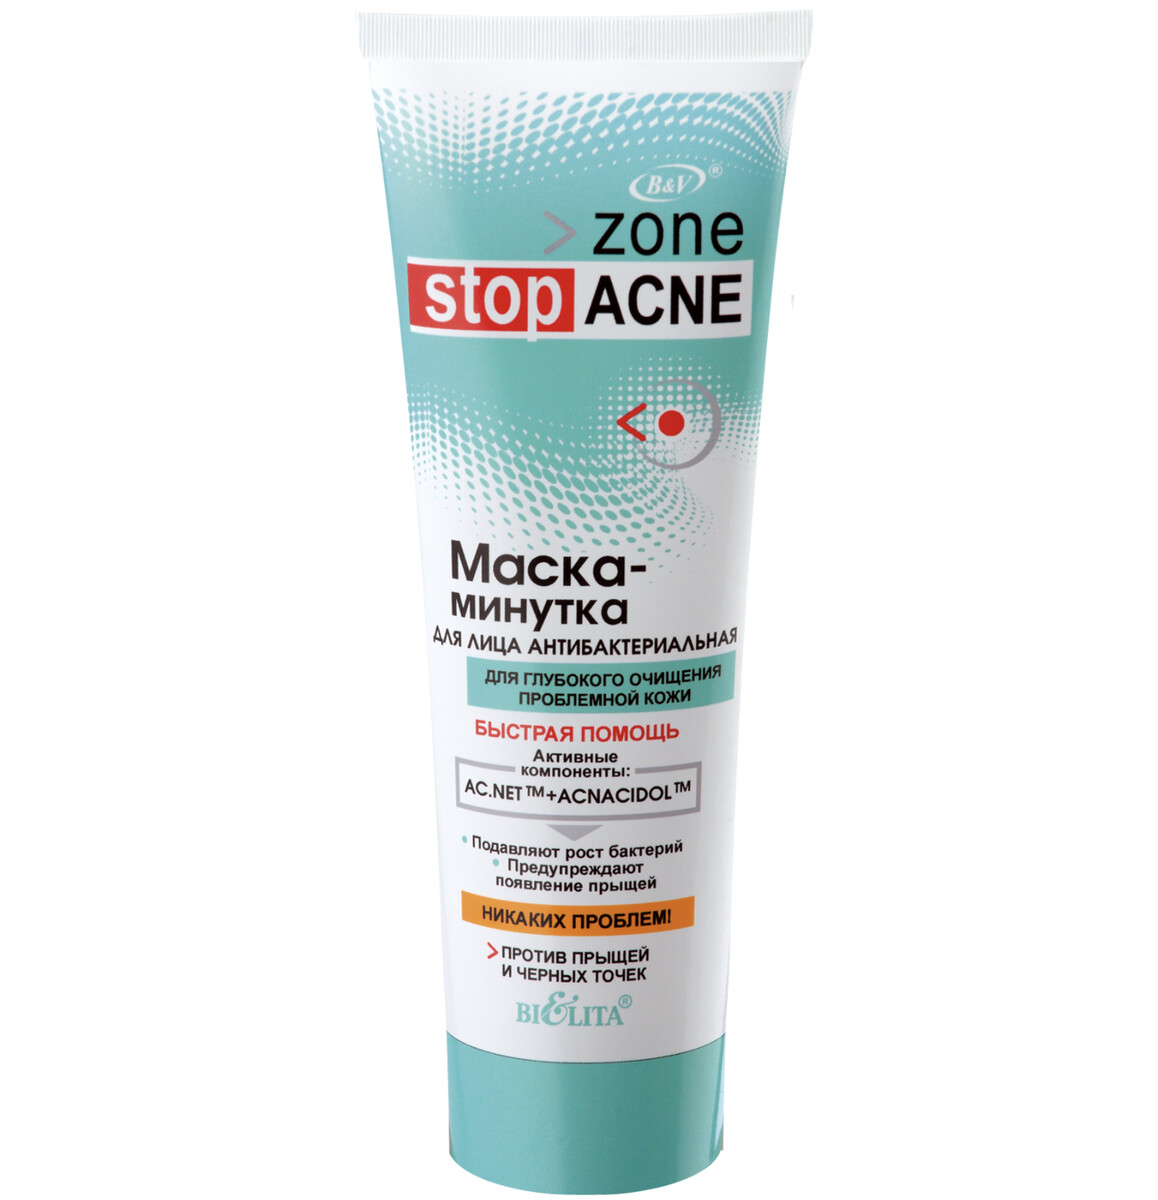 Stop acne маска-минутка для лица антибактериальная 75 мл